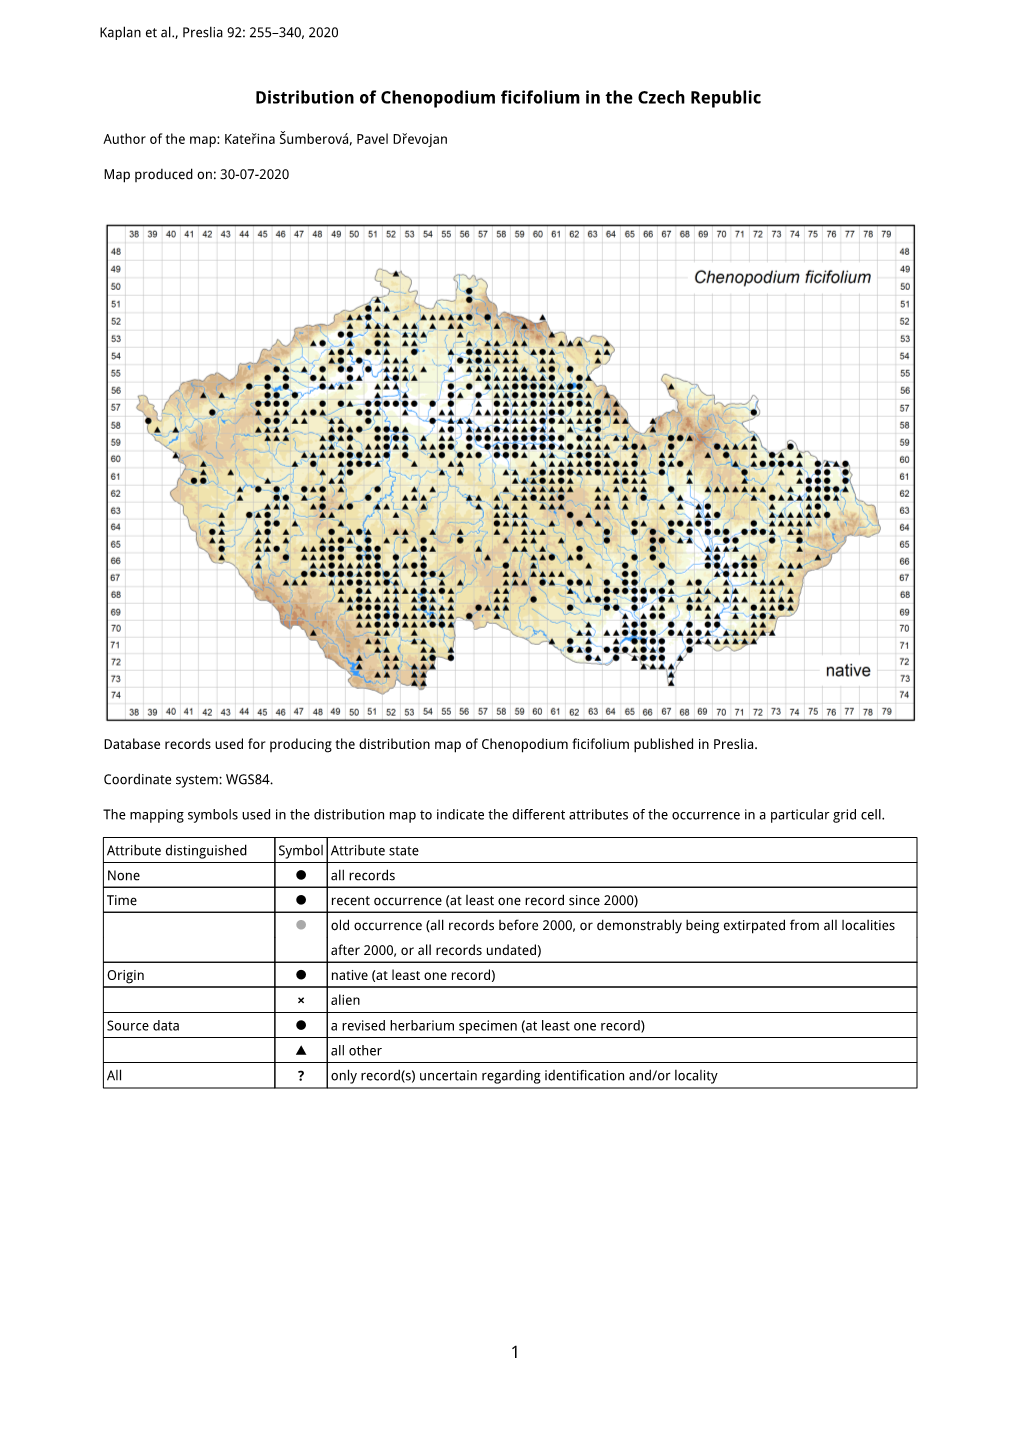 1 Distribution of Chenopodium Ficifolium in the Czech Republic